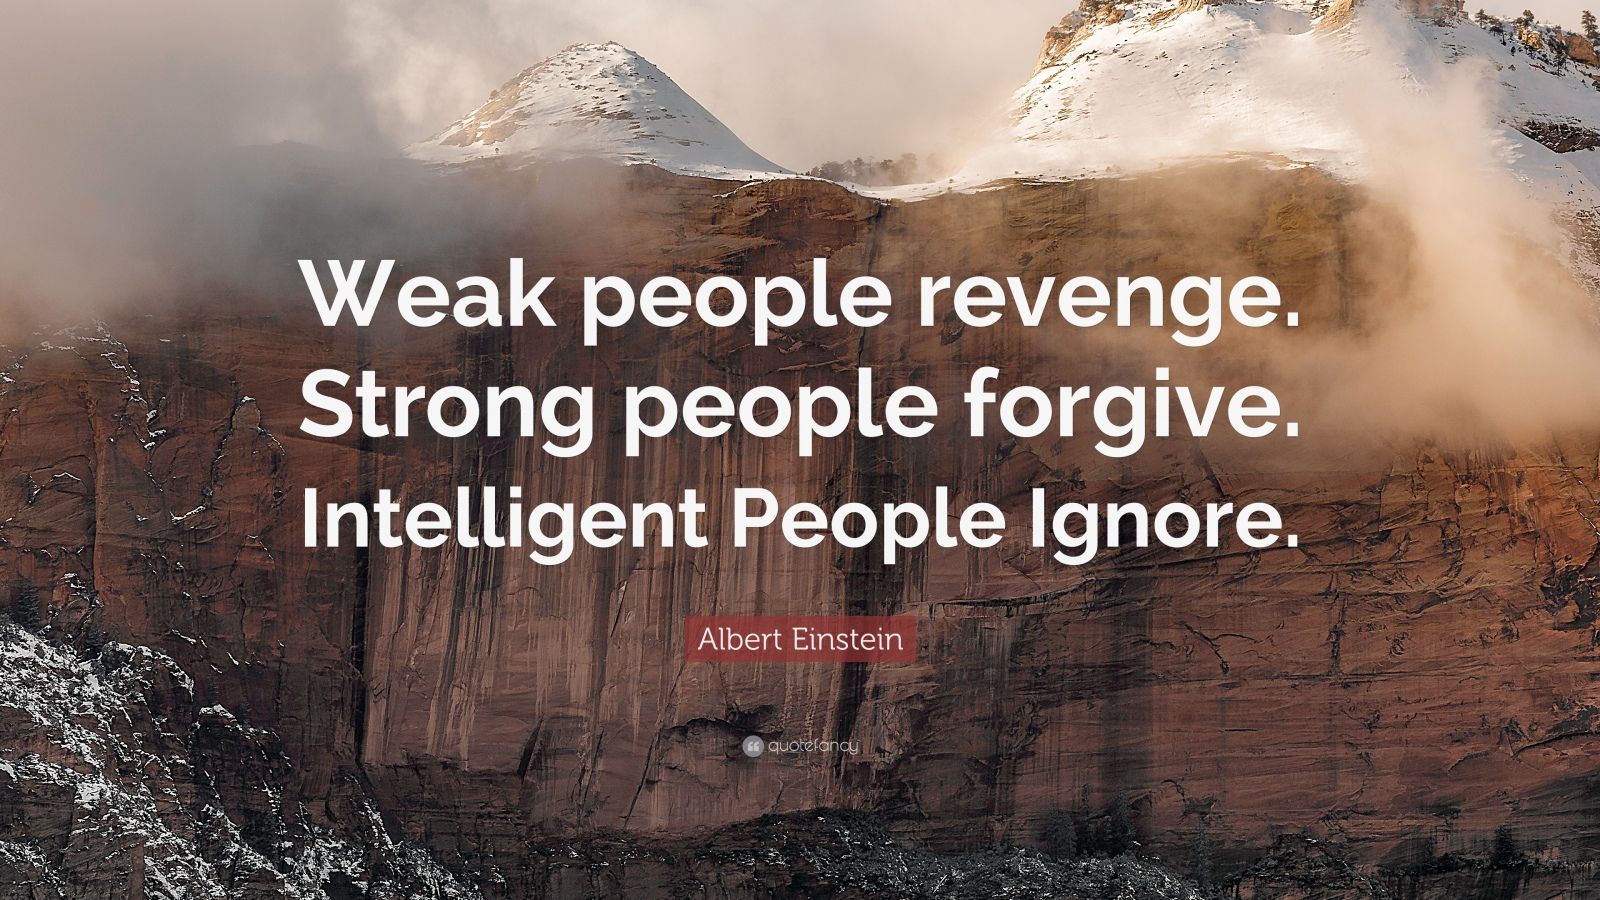 Albert Einstein Quote: “Weak people revenge. Strong people forgive ...